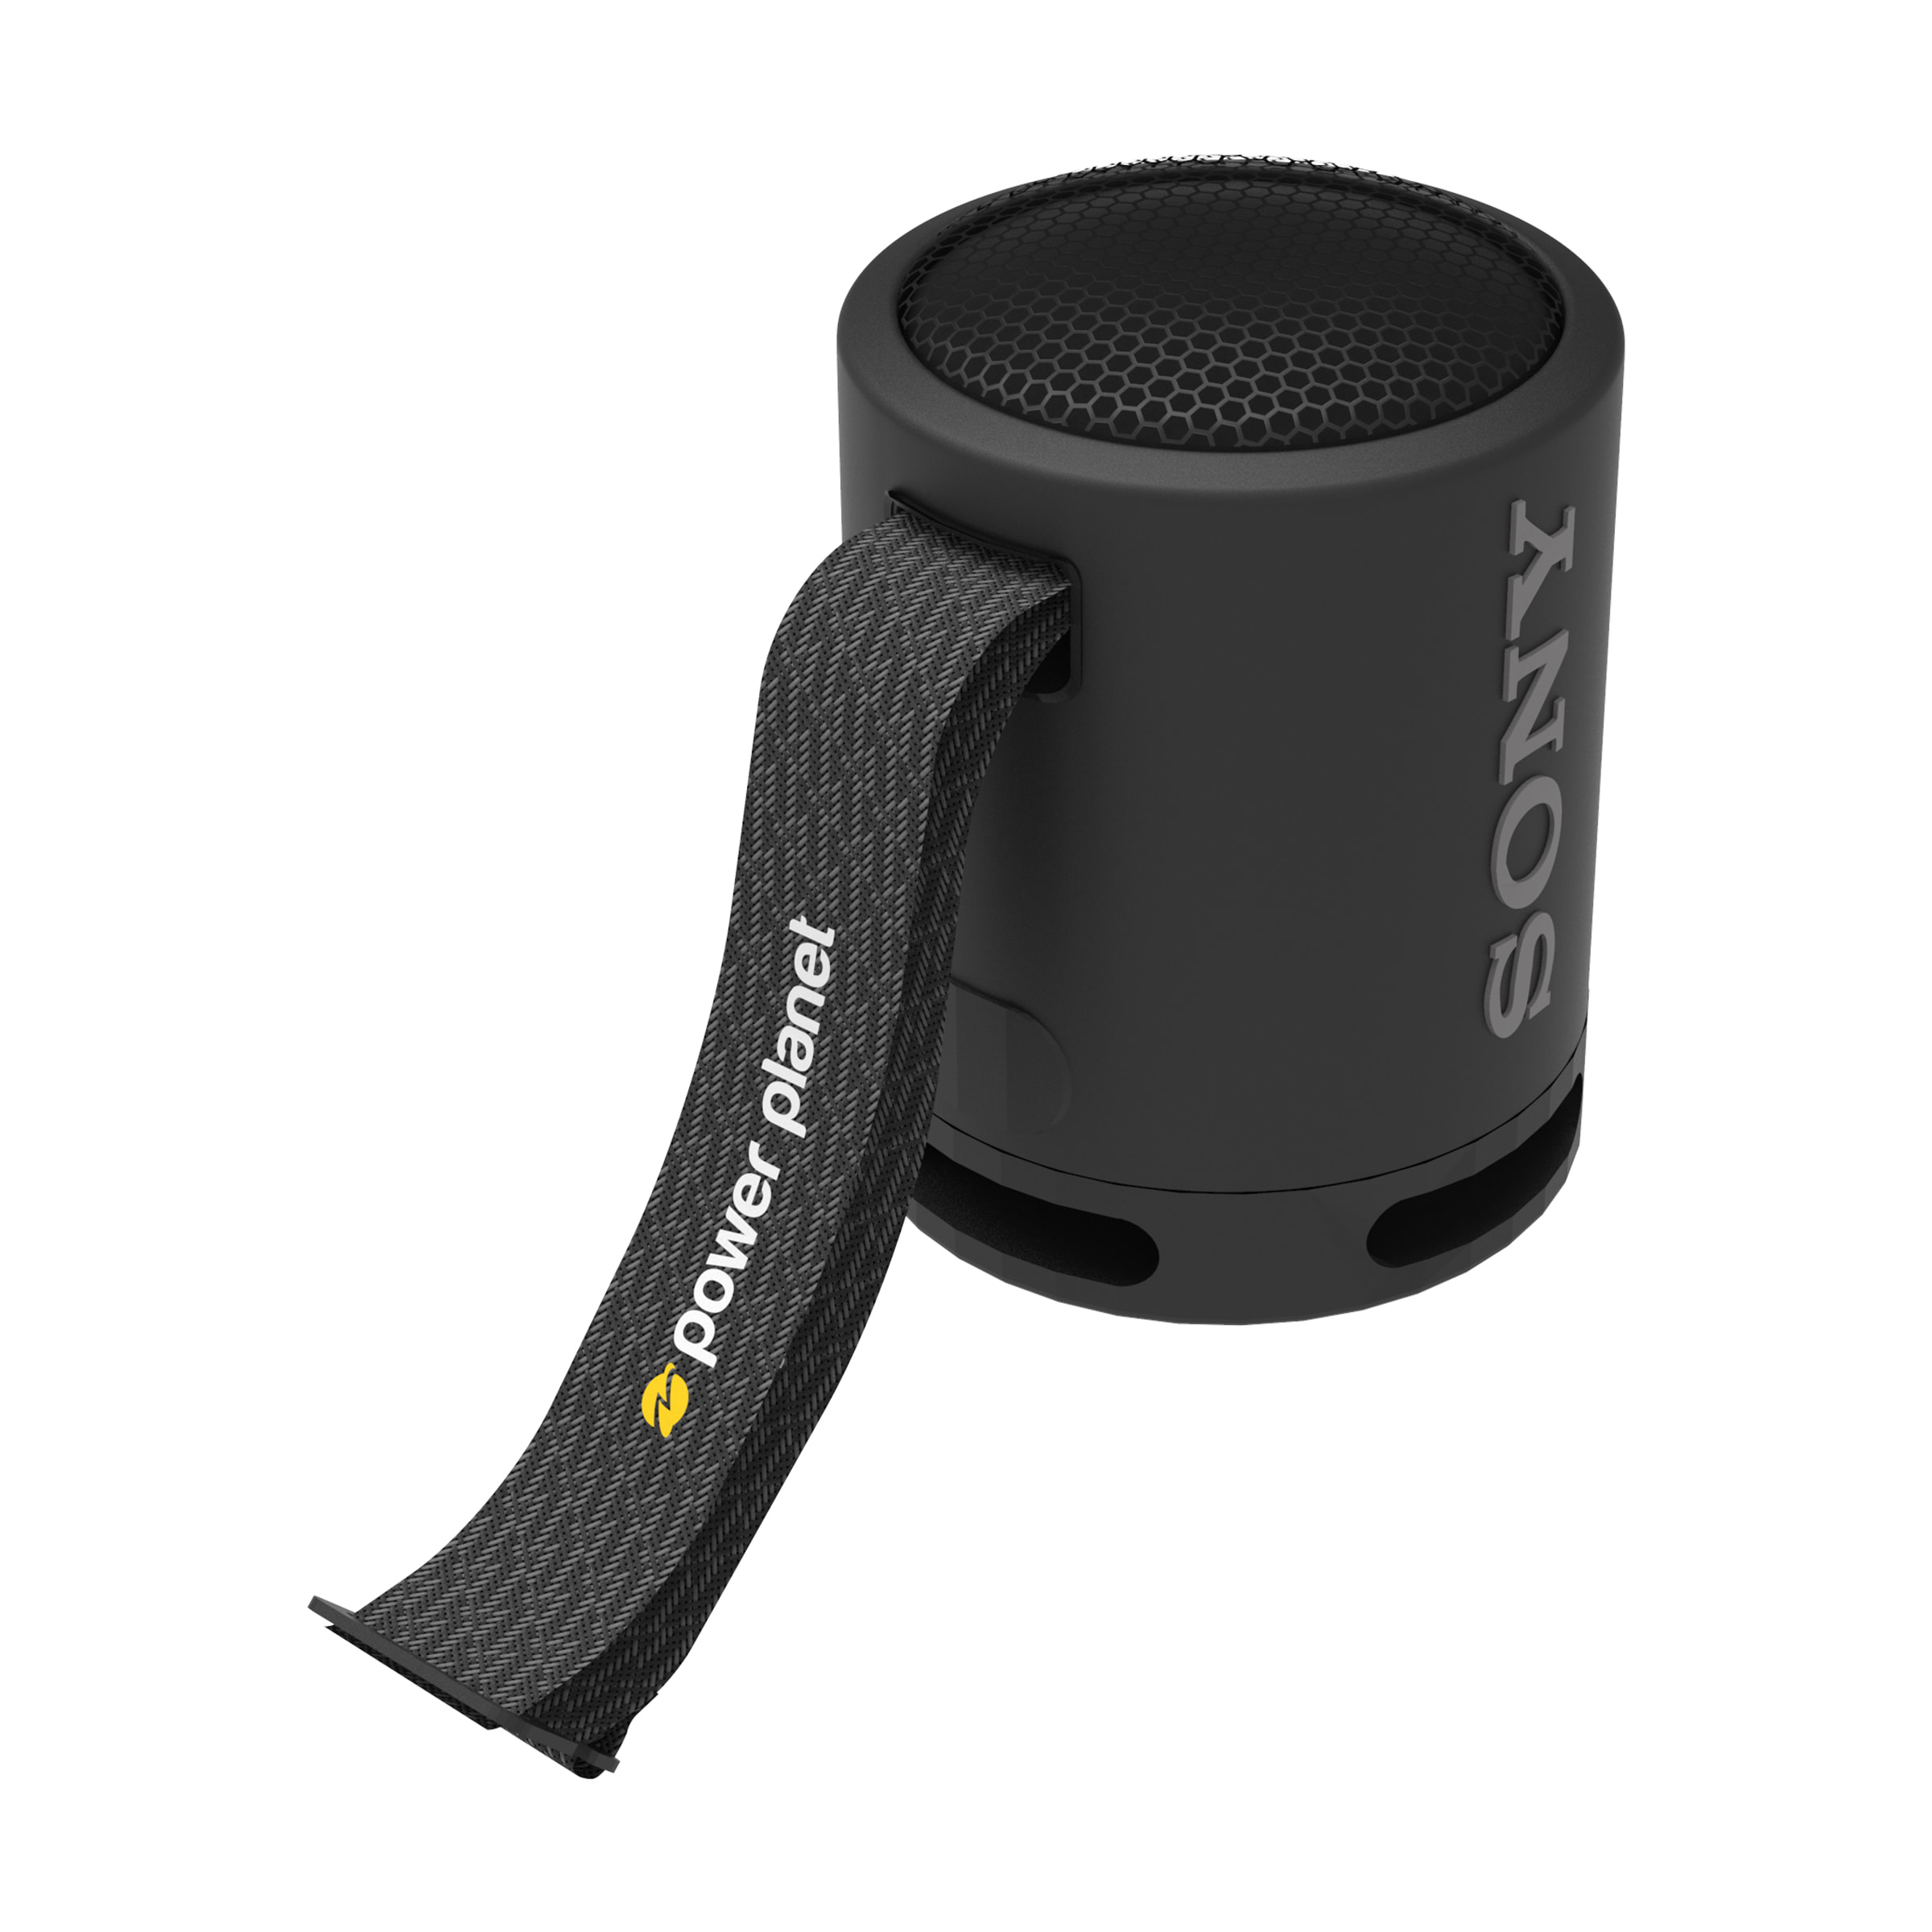 Sony Bluetooth Speaker SRS-XB13 Black